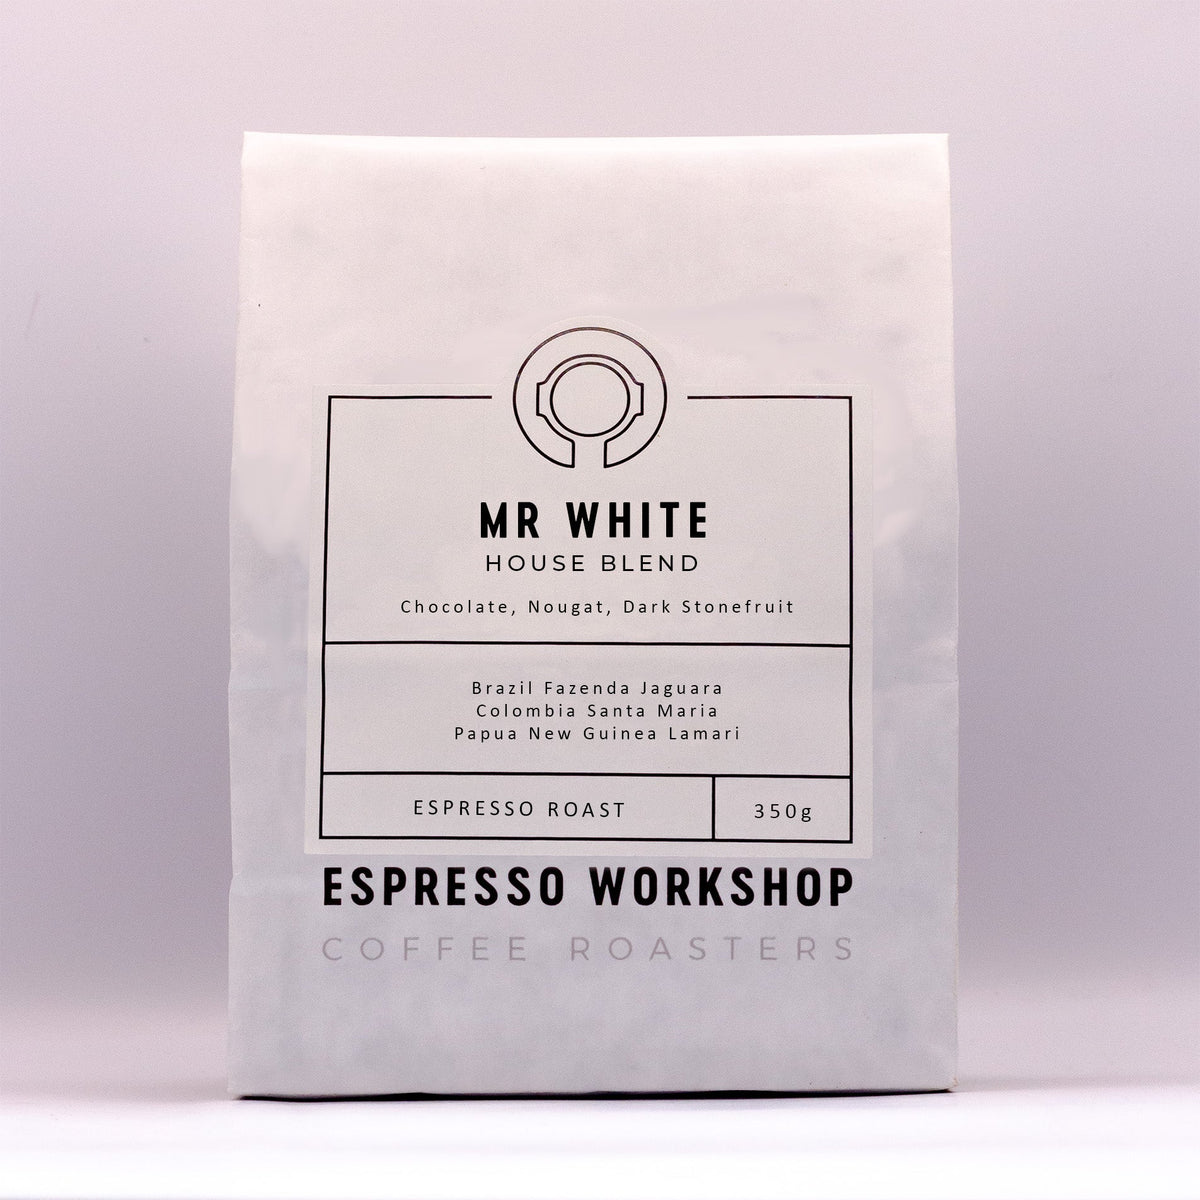 Espresso Workshop Mr White - House Blend